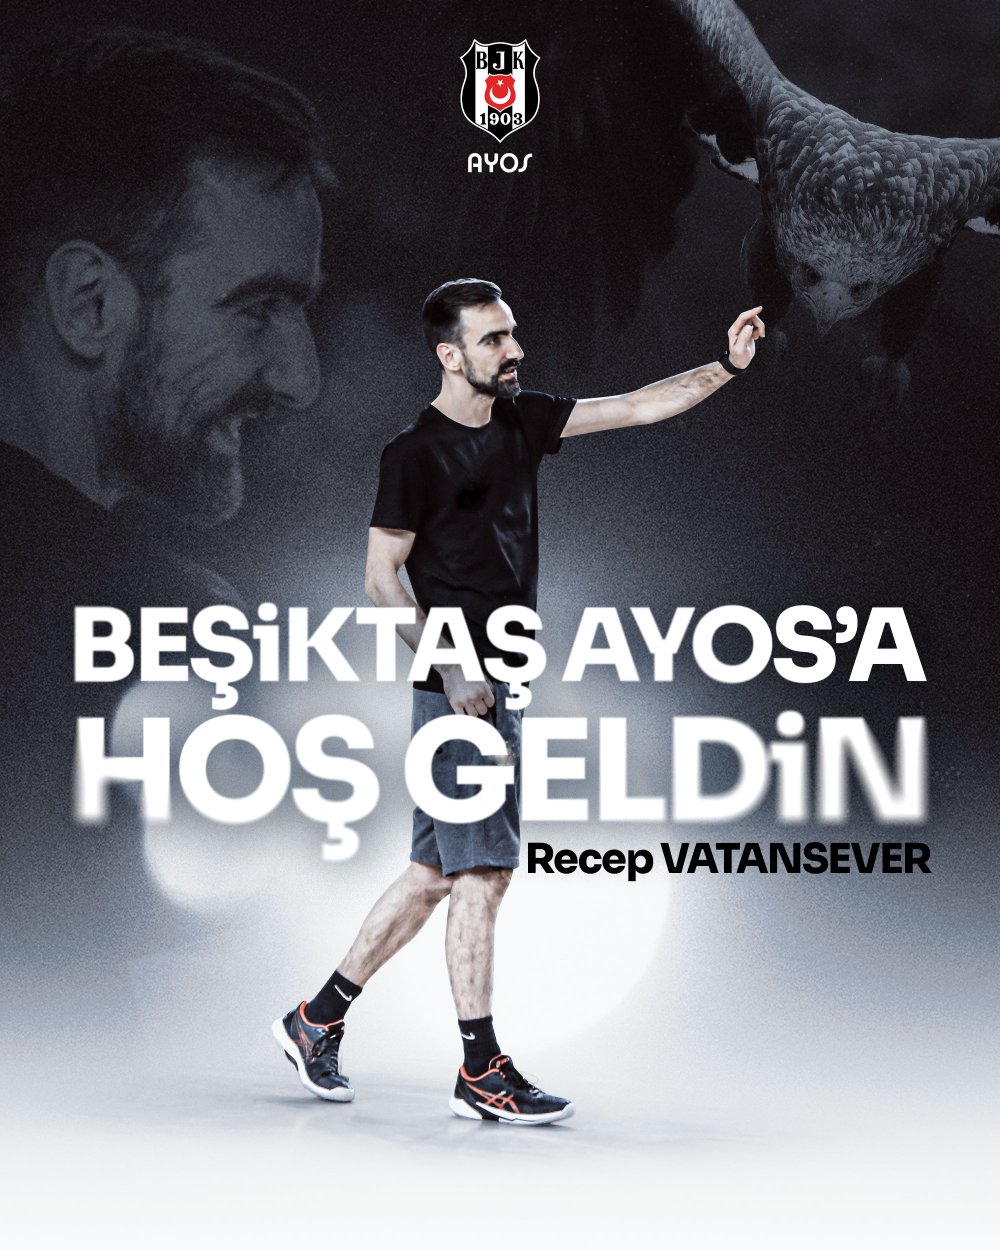 Beşiktaş Ayos’ta Recep Vatansever dönemi